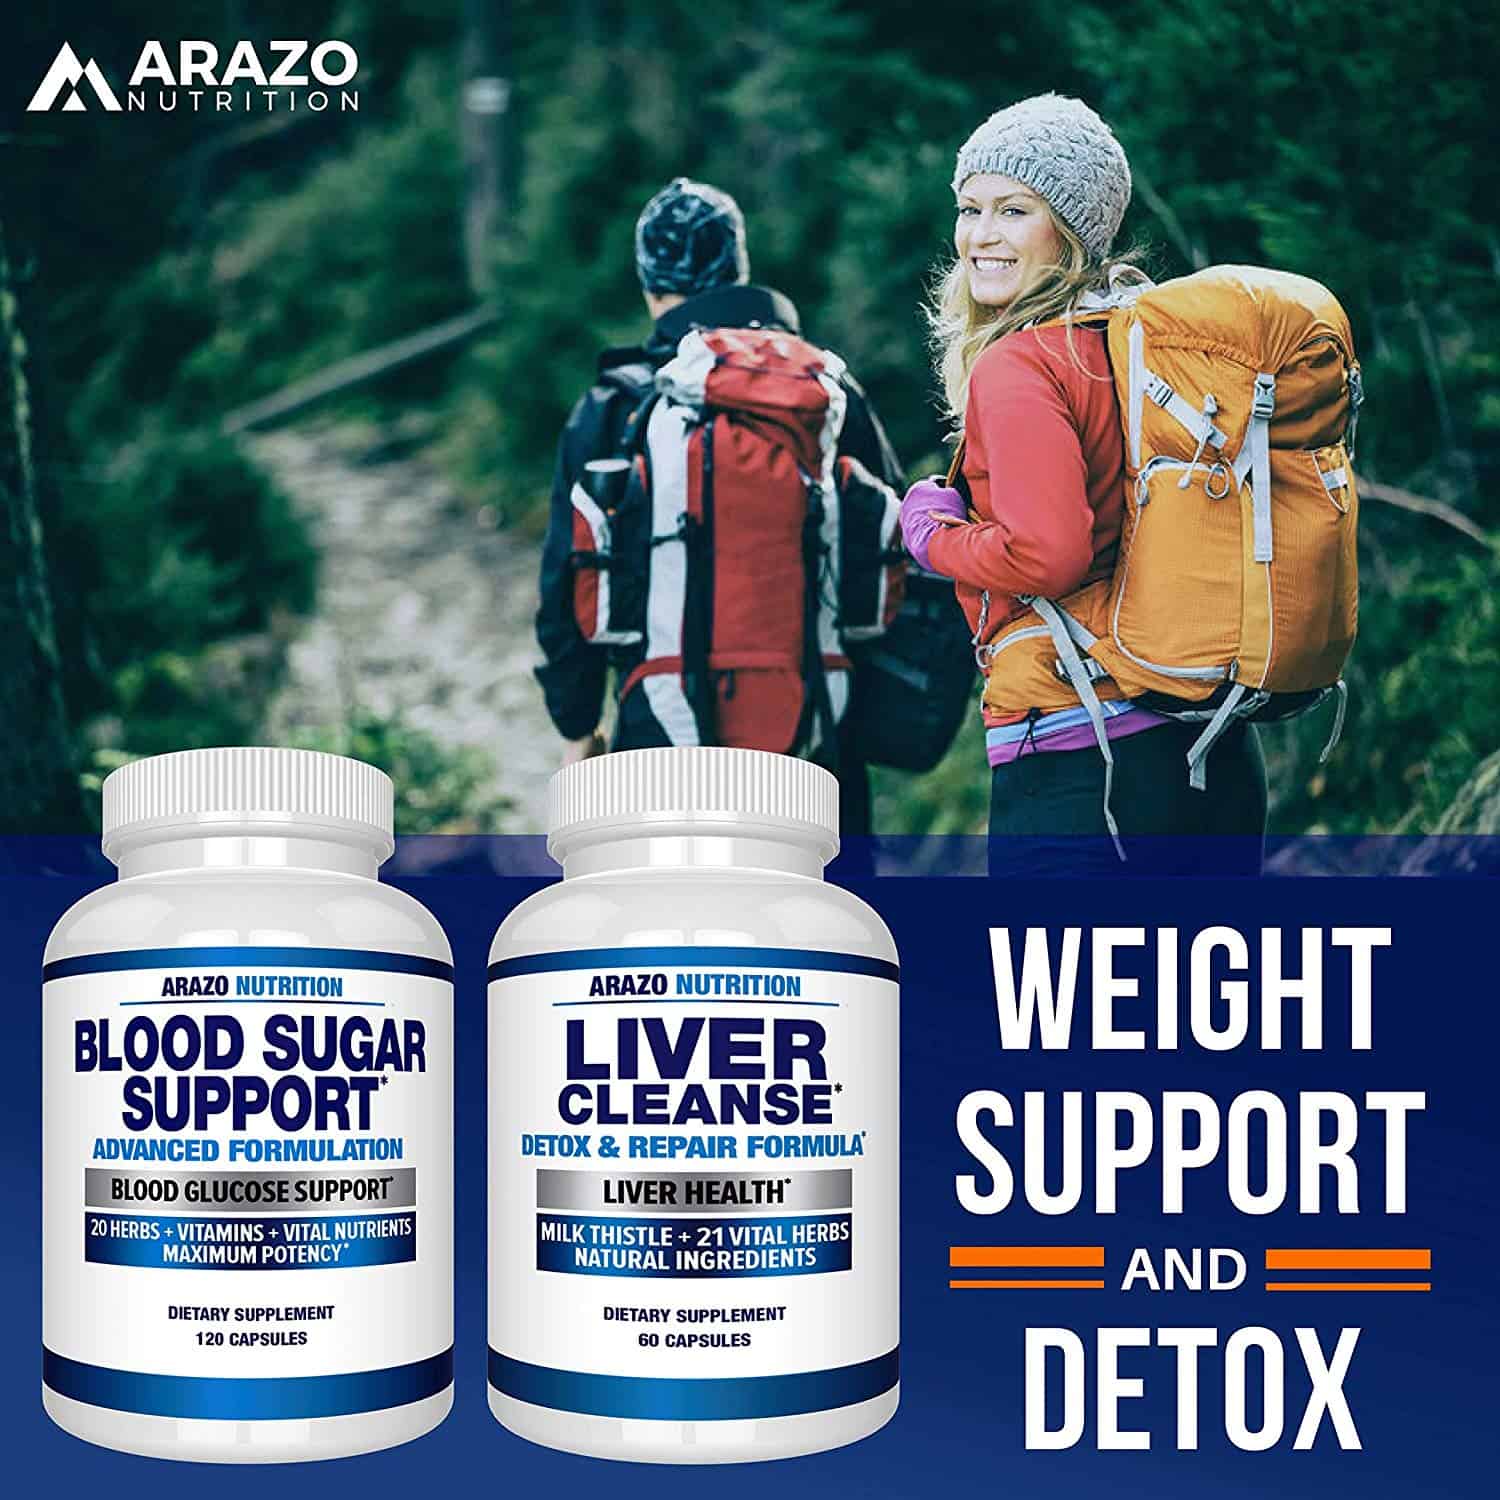 Arazo Nutrition's Blood Sugar Support - Health Benefits